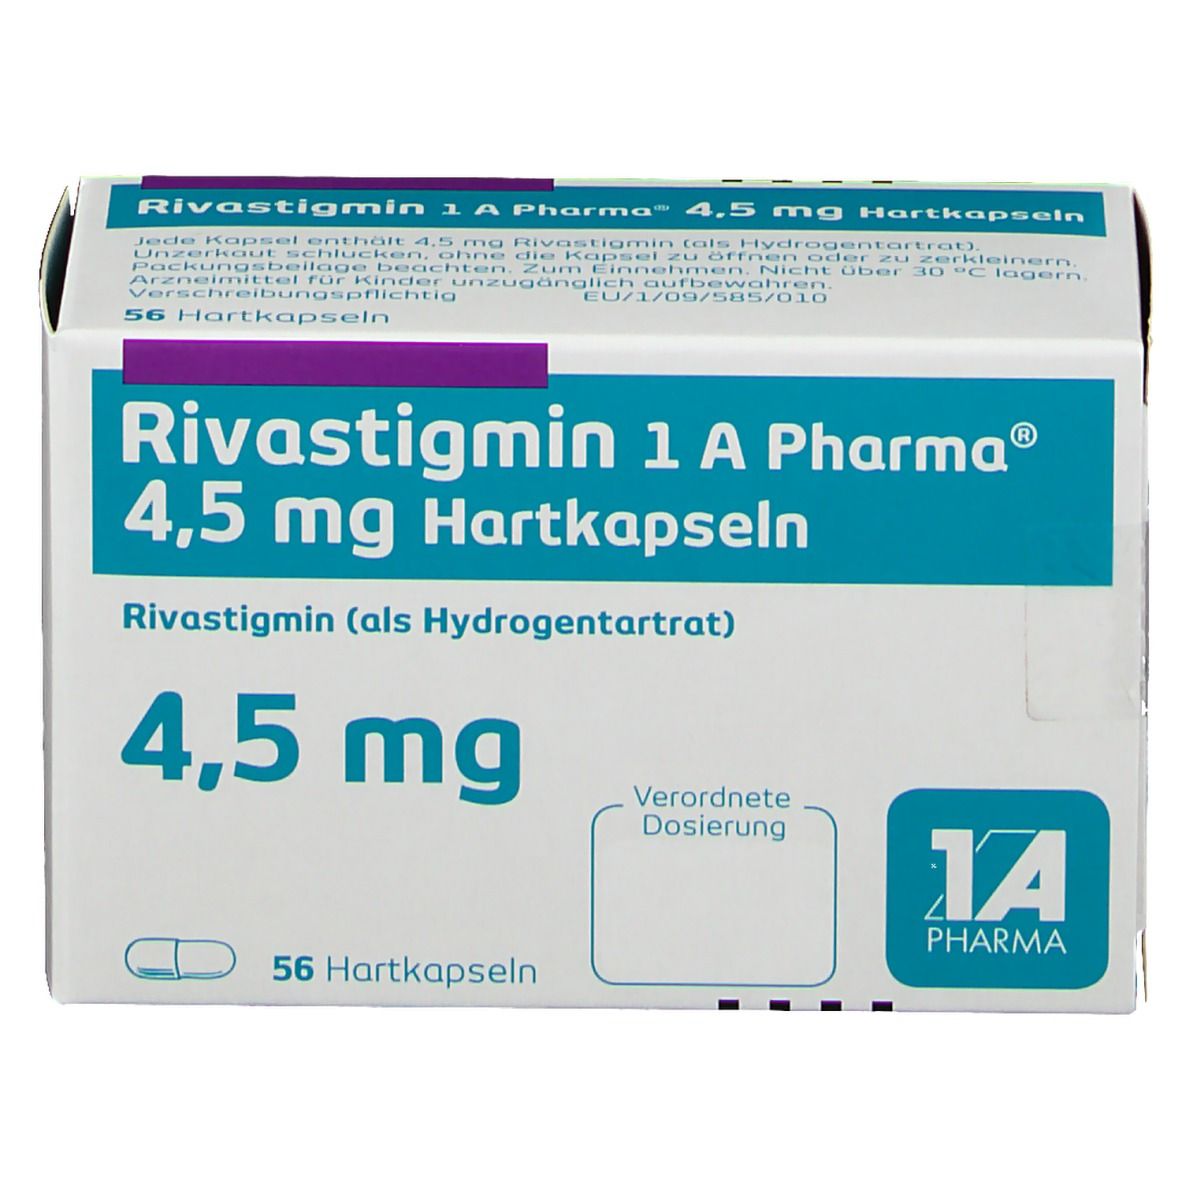 Rivastigmin 1 A Pharma® 4,5 mg